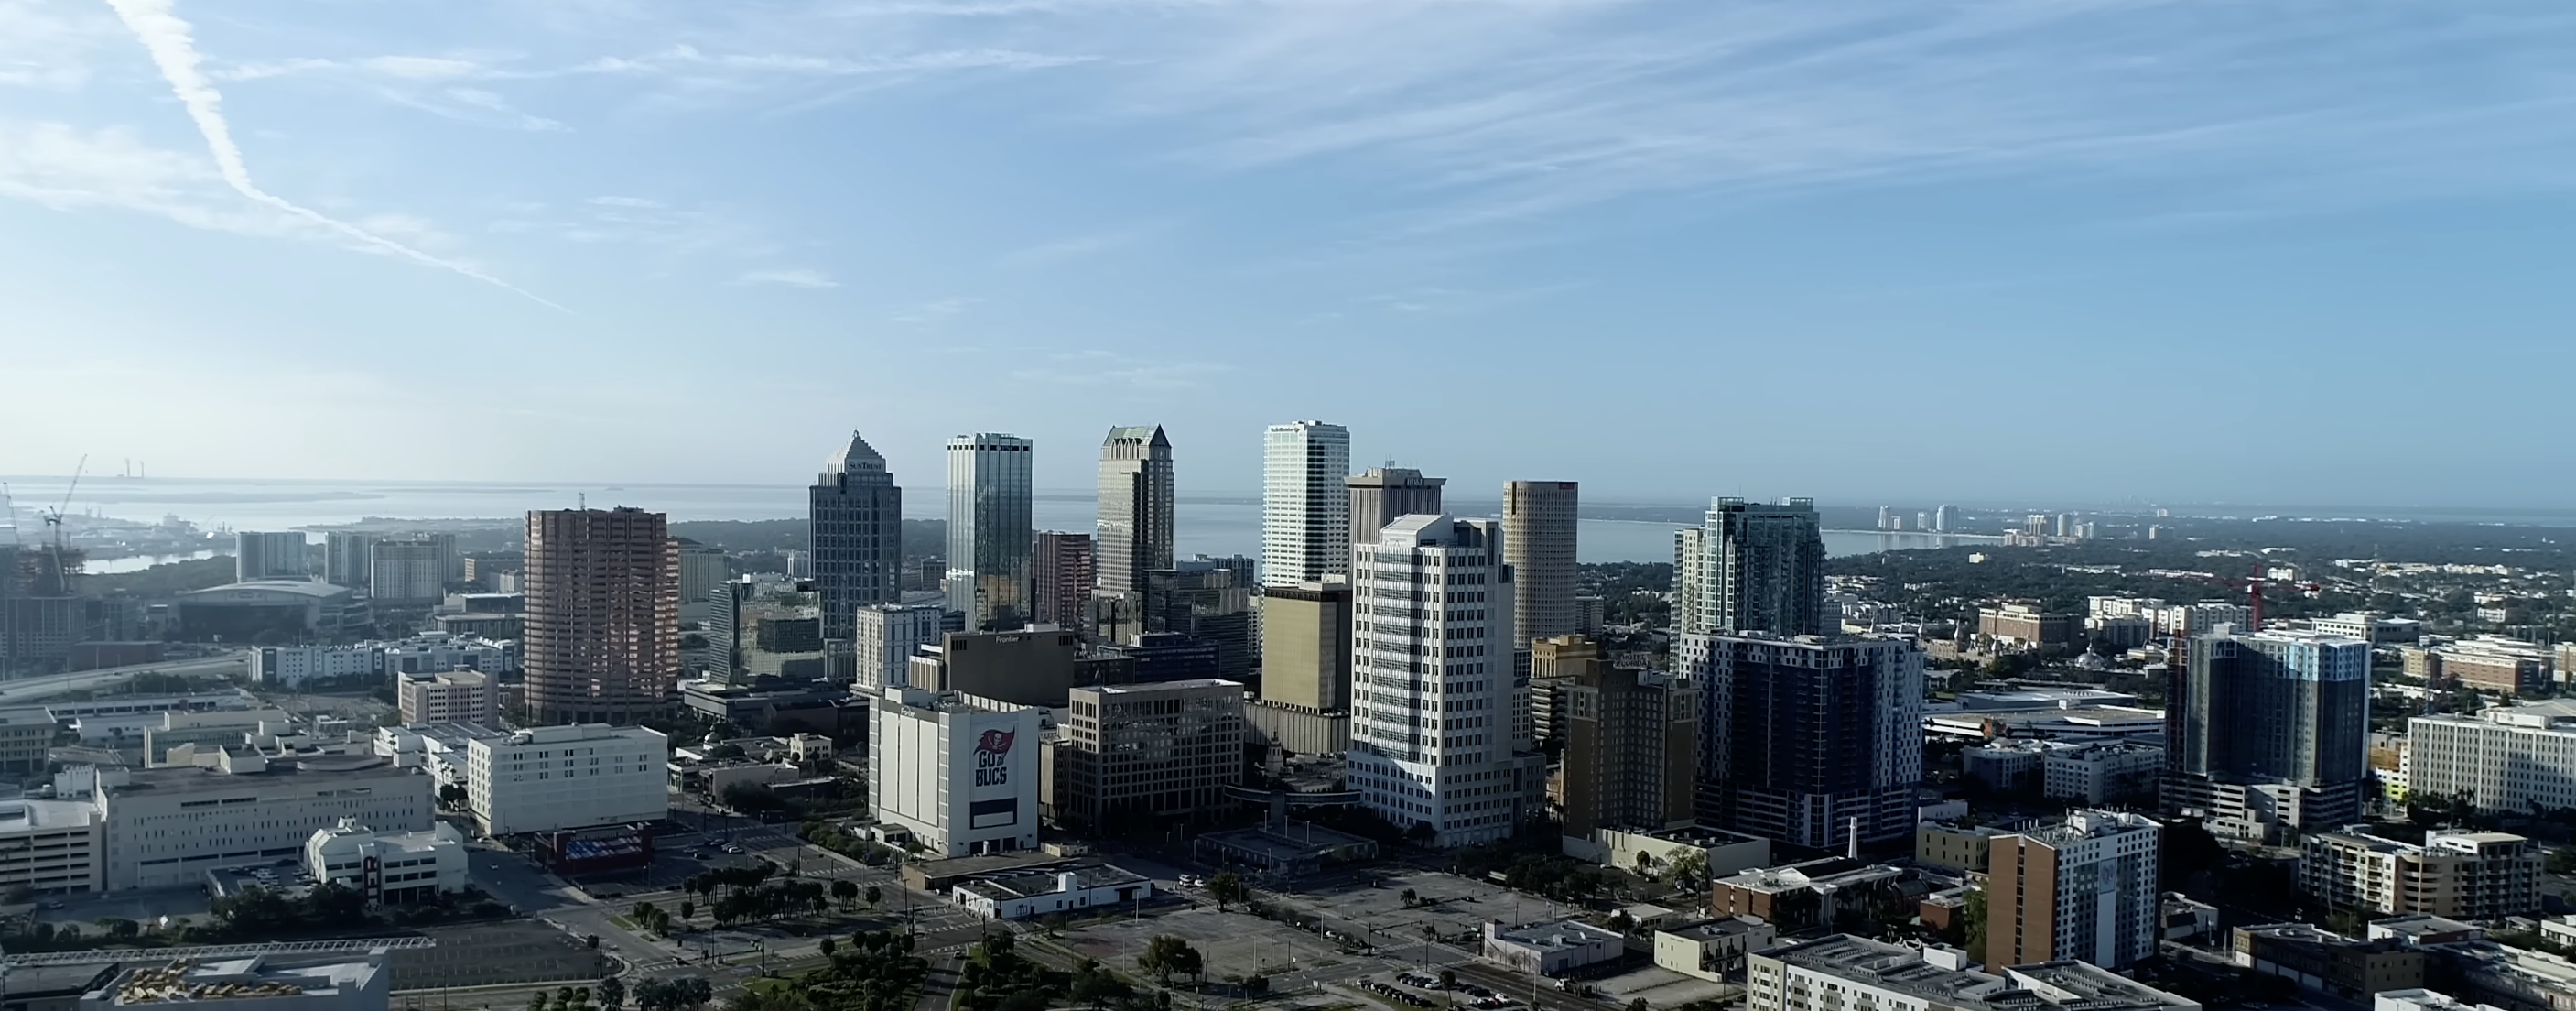 Tampa aerial view 